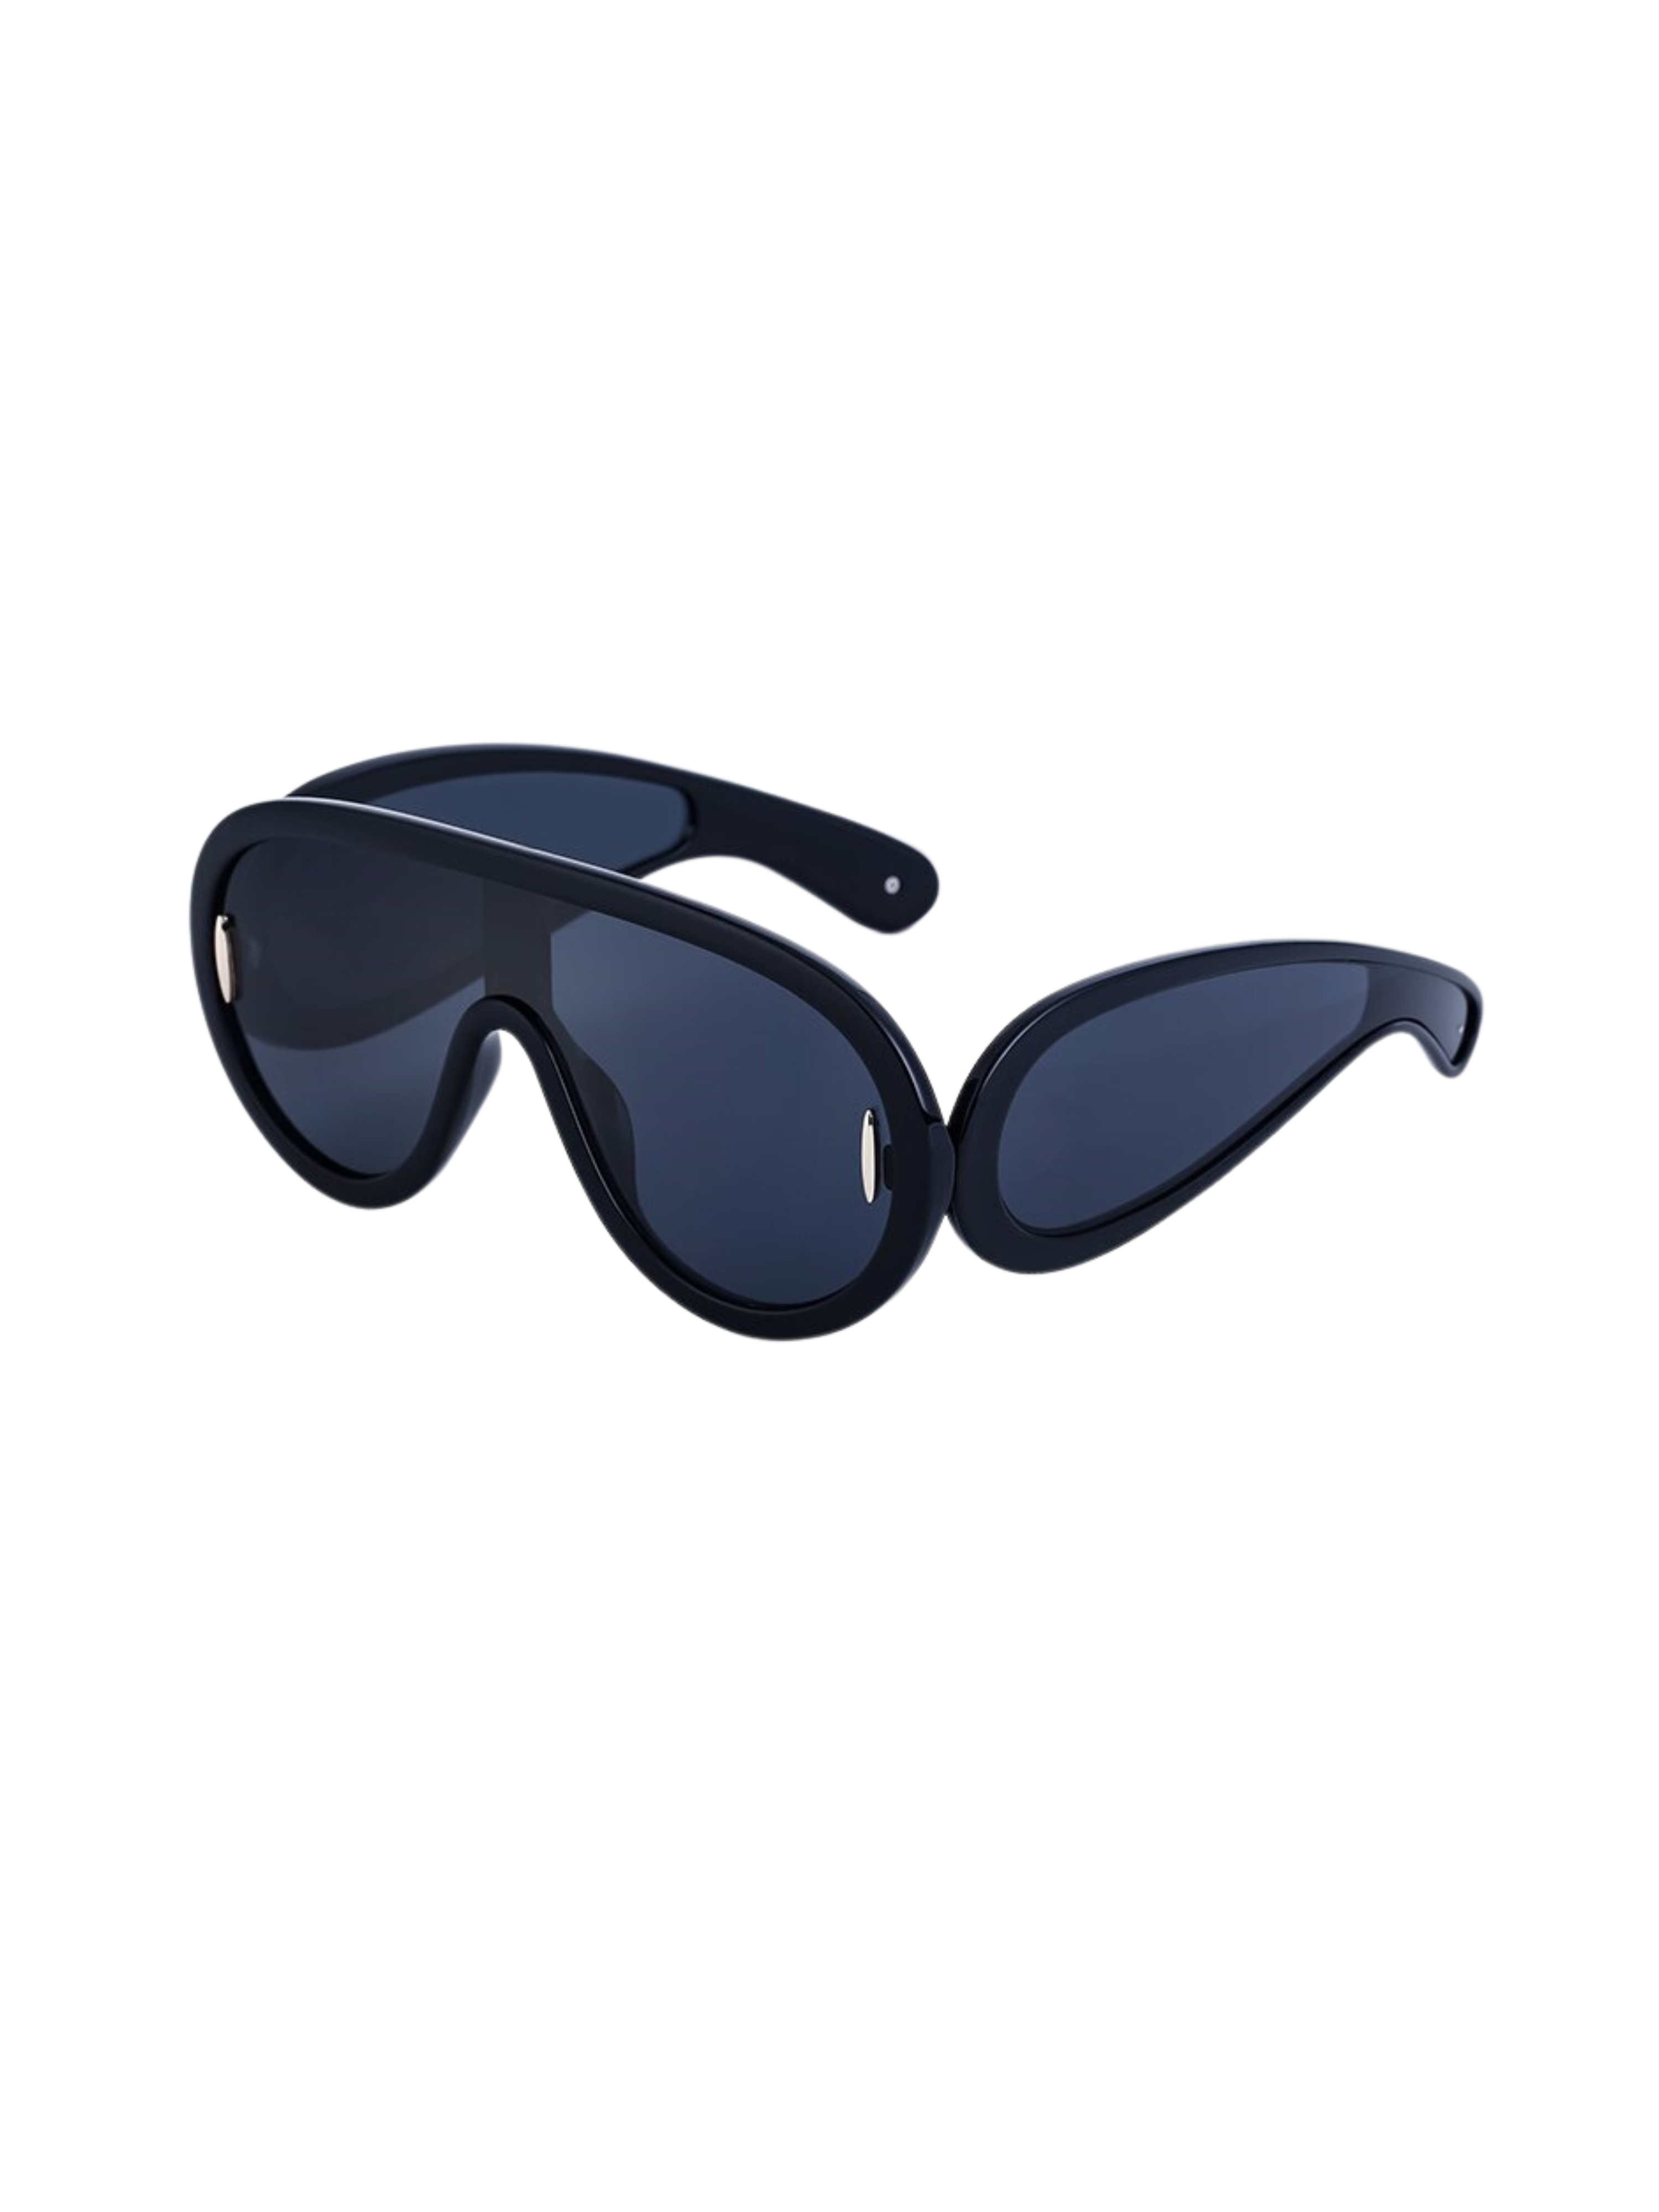 Lenny Shield Sunglasses